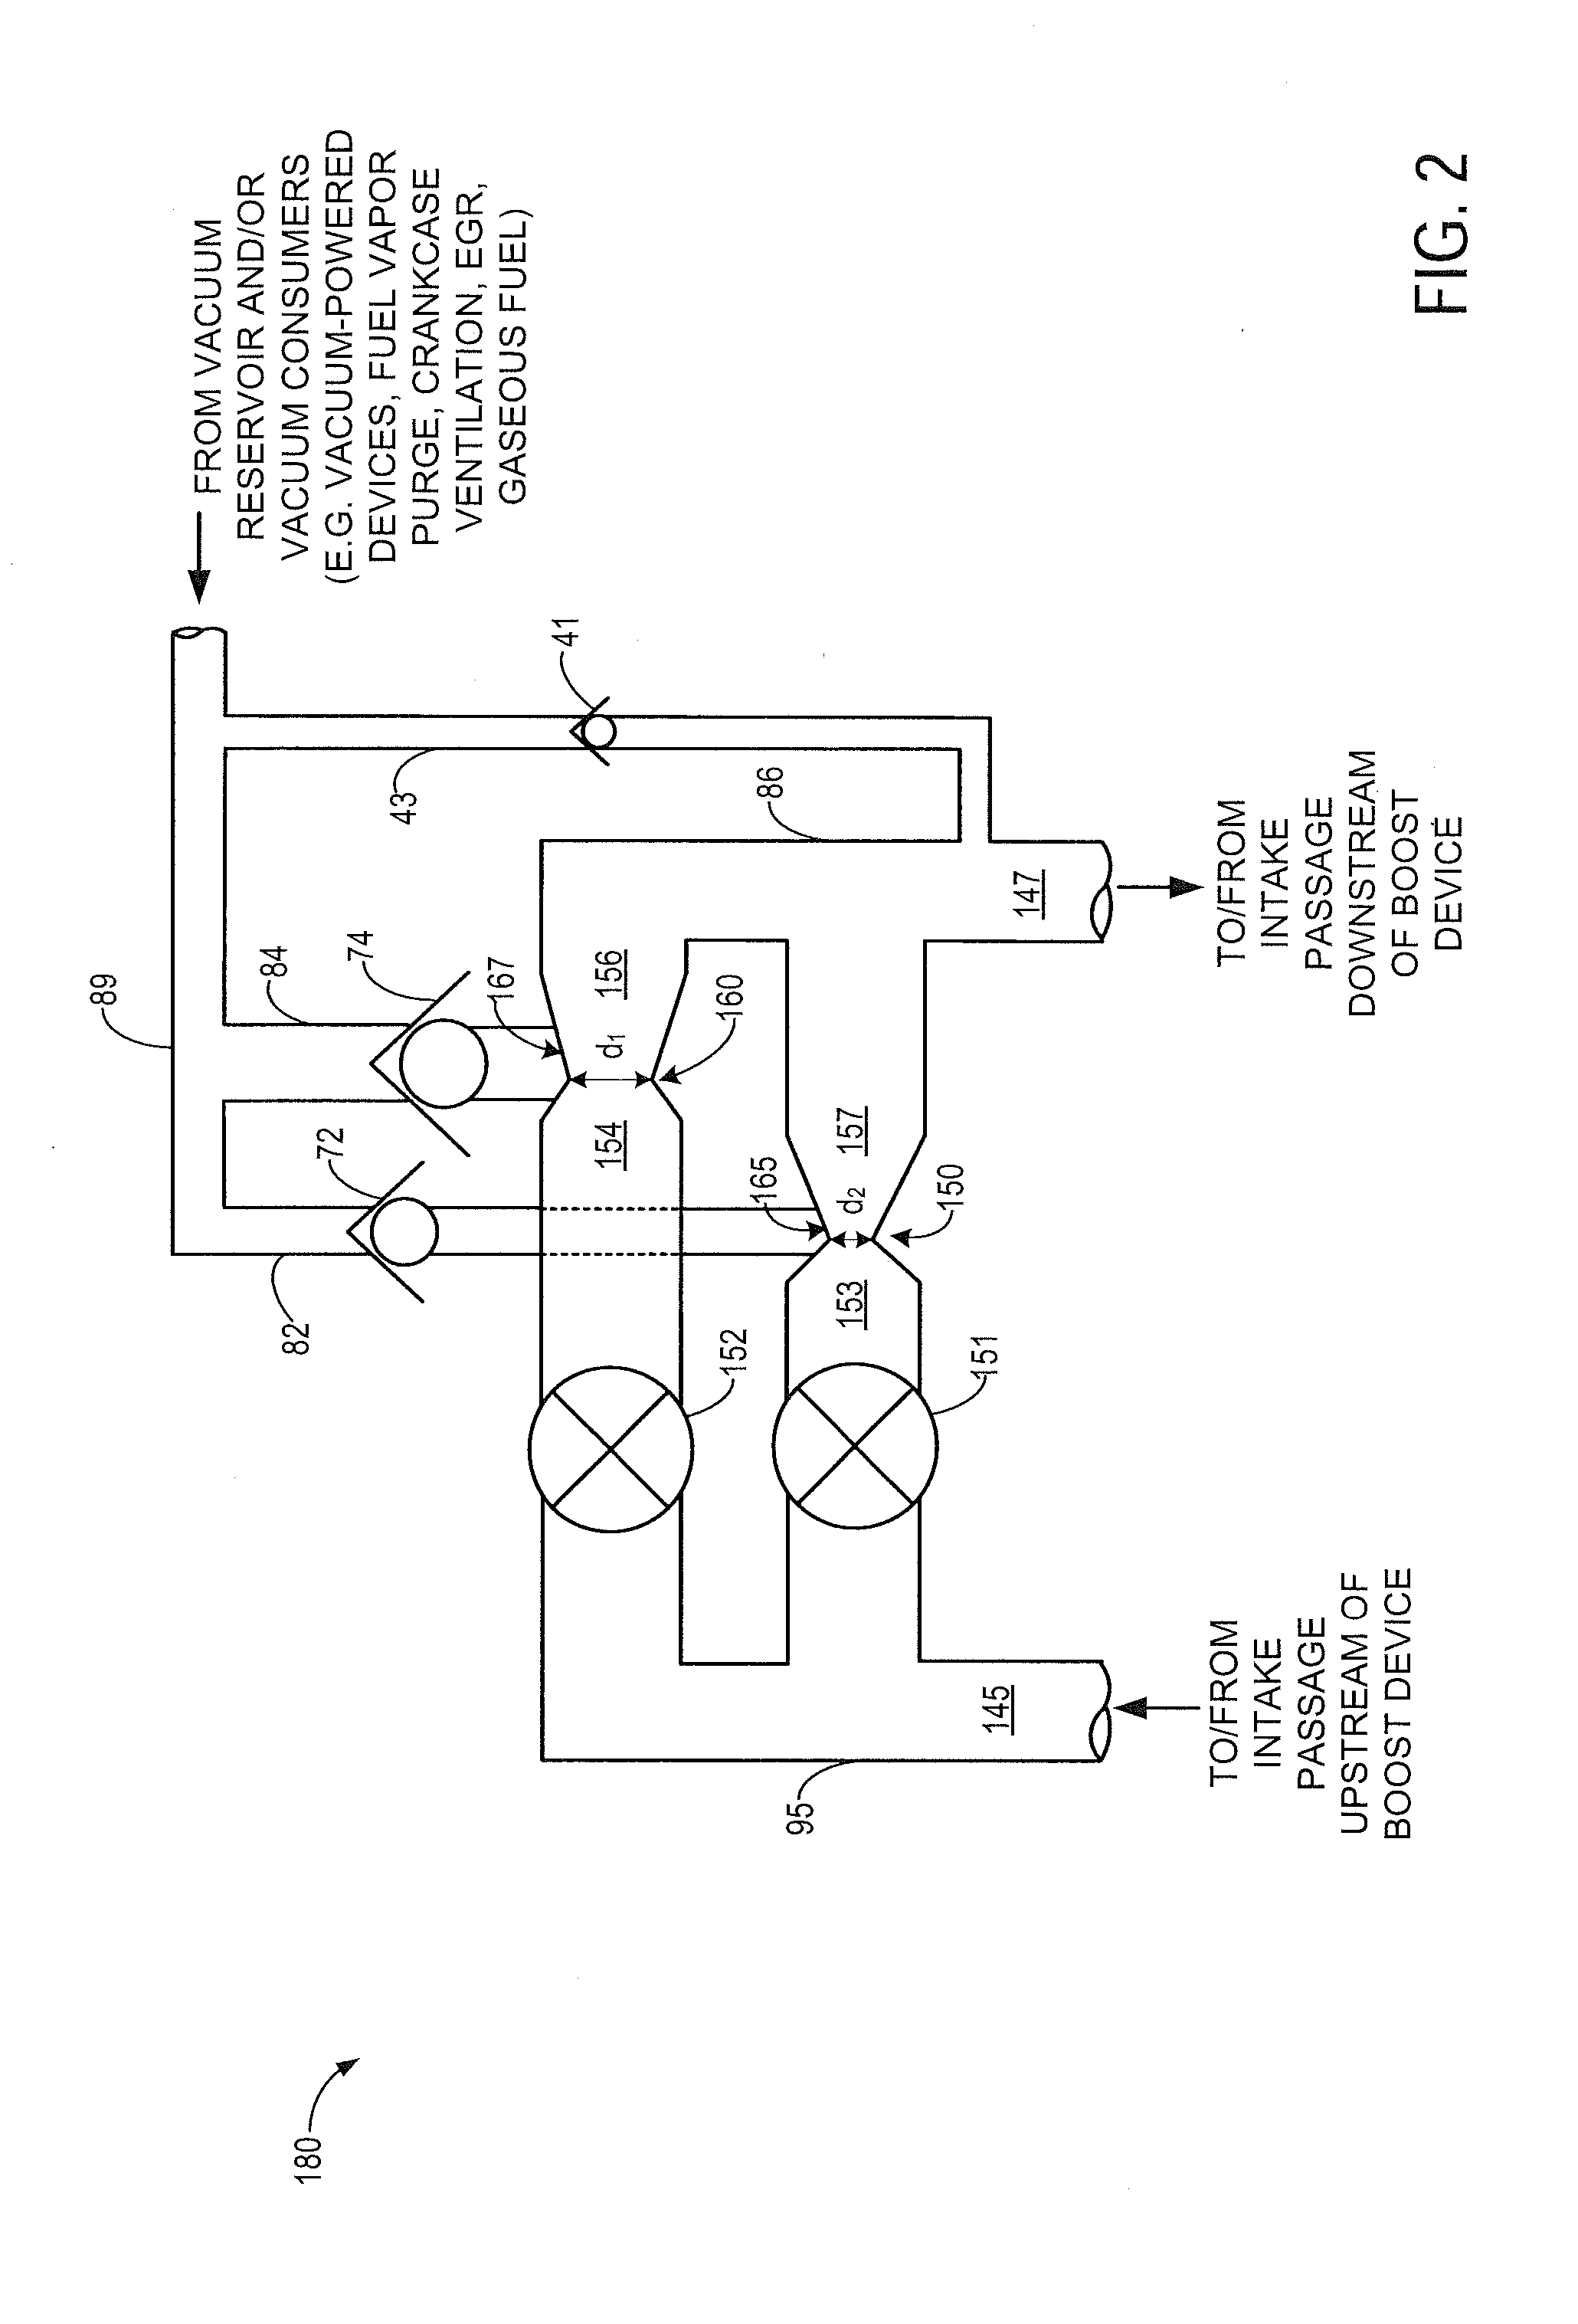 Parallel aspirator arrangement for vacuum generation and compressor bypass